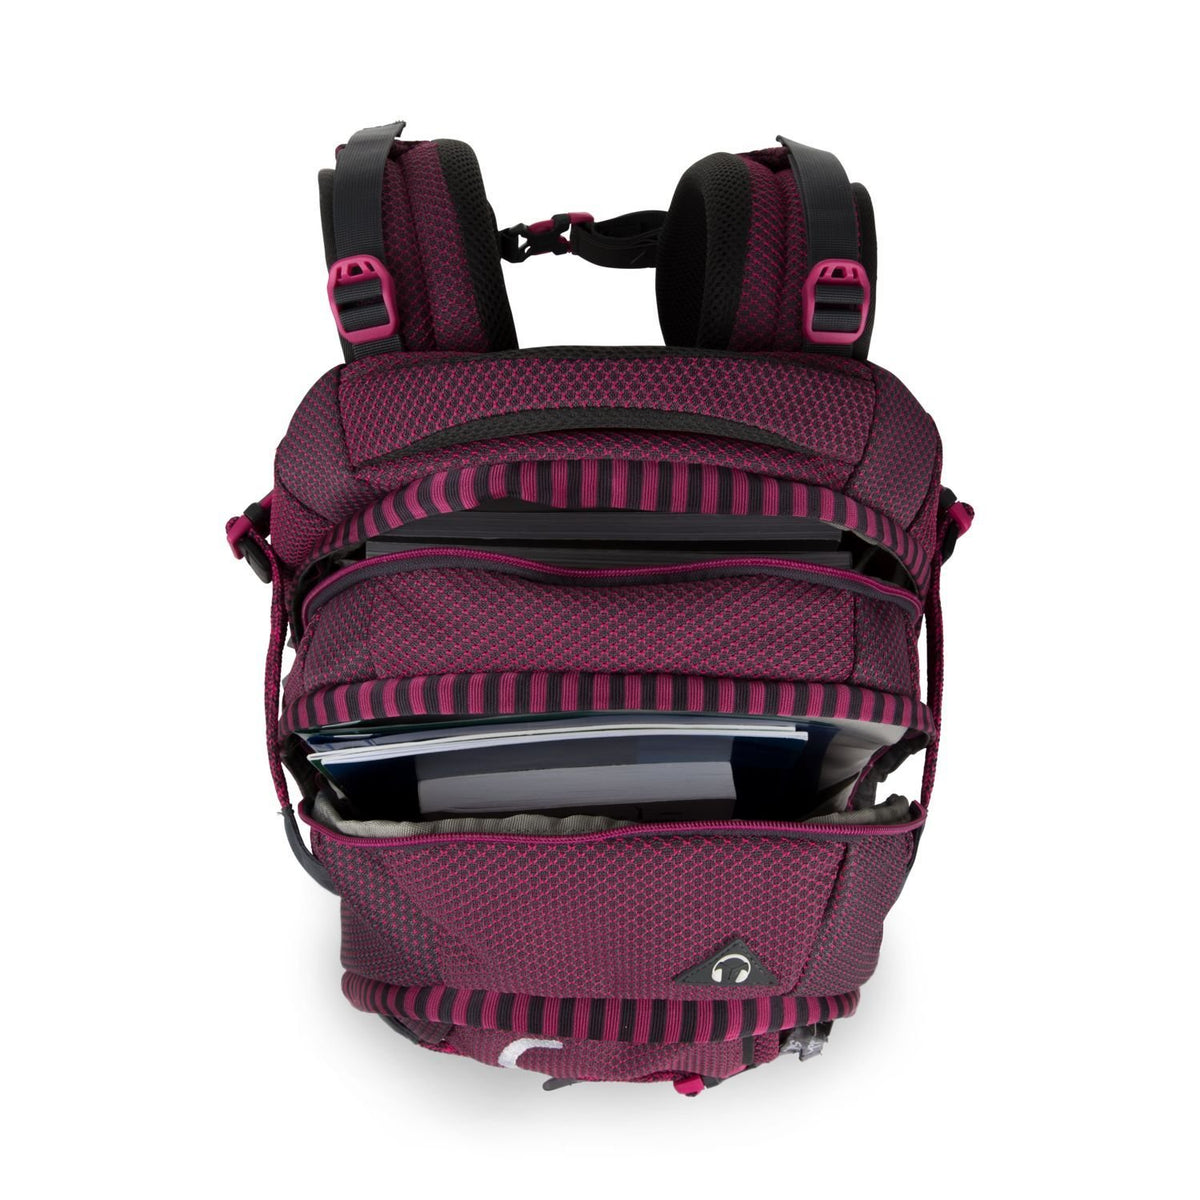 Satch Pack Fire Phantom ergonomic school backpack